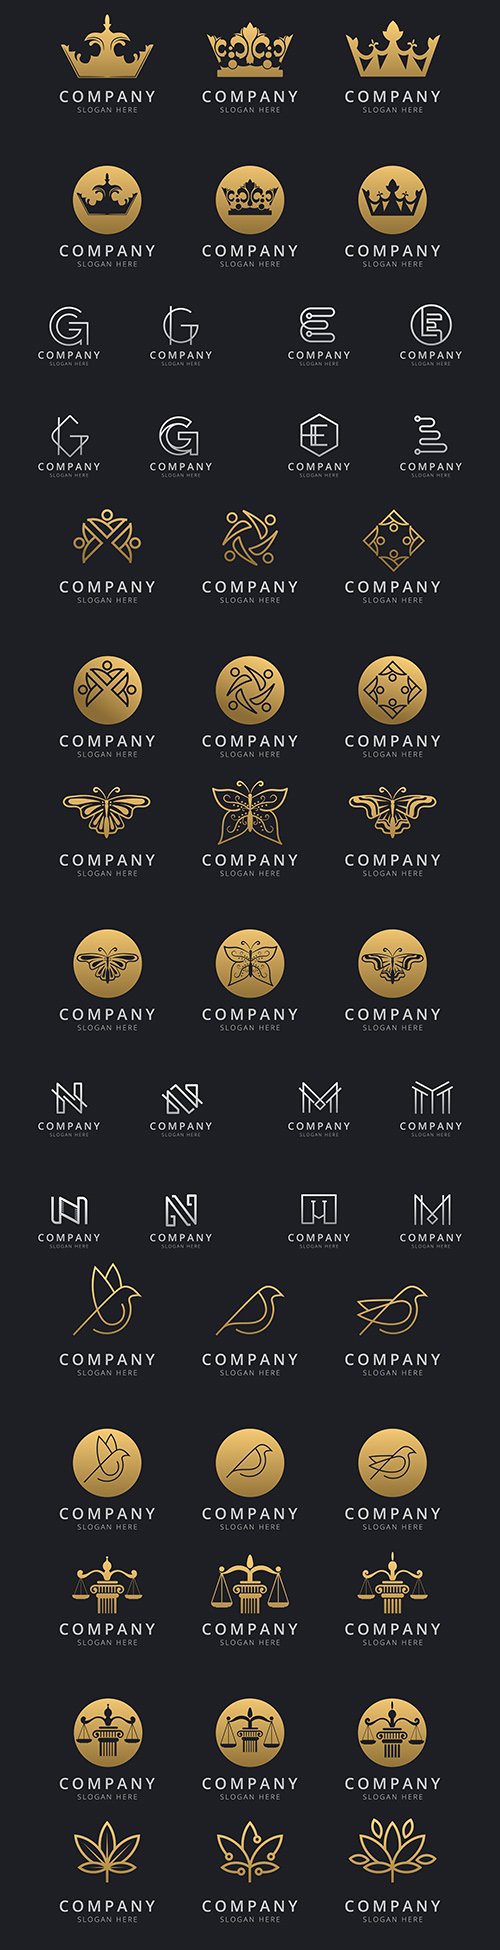 Brand name company logos business corporate design 36